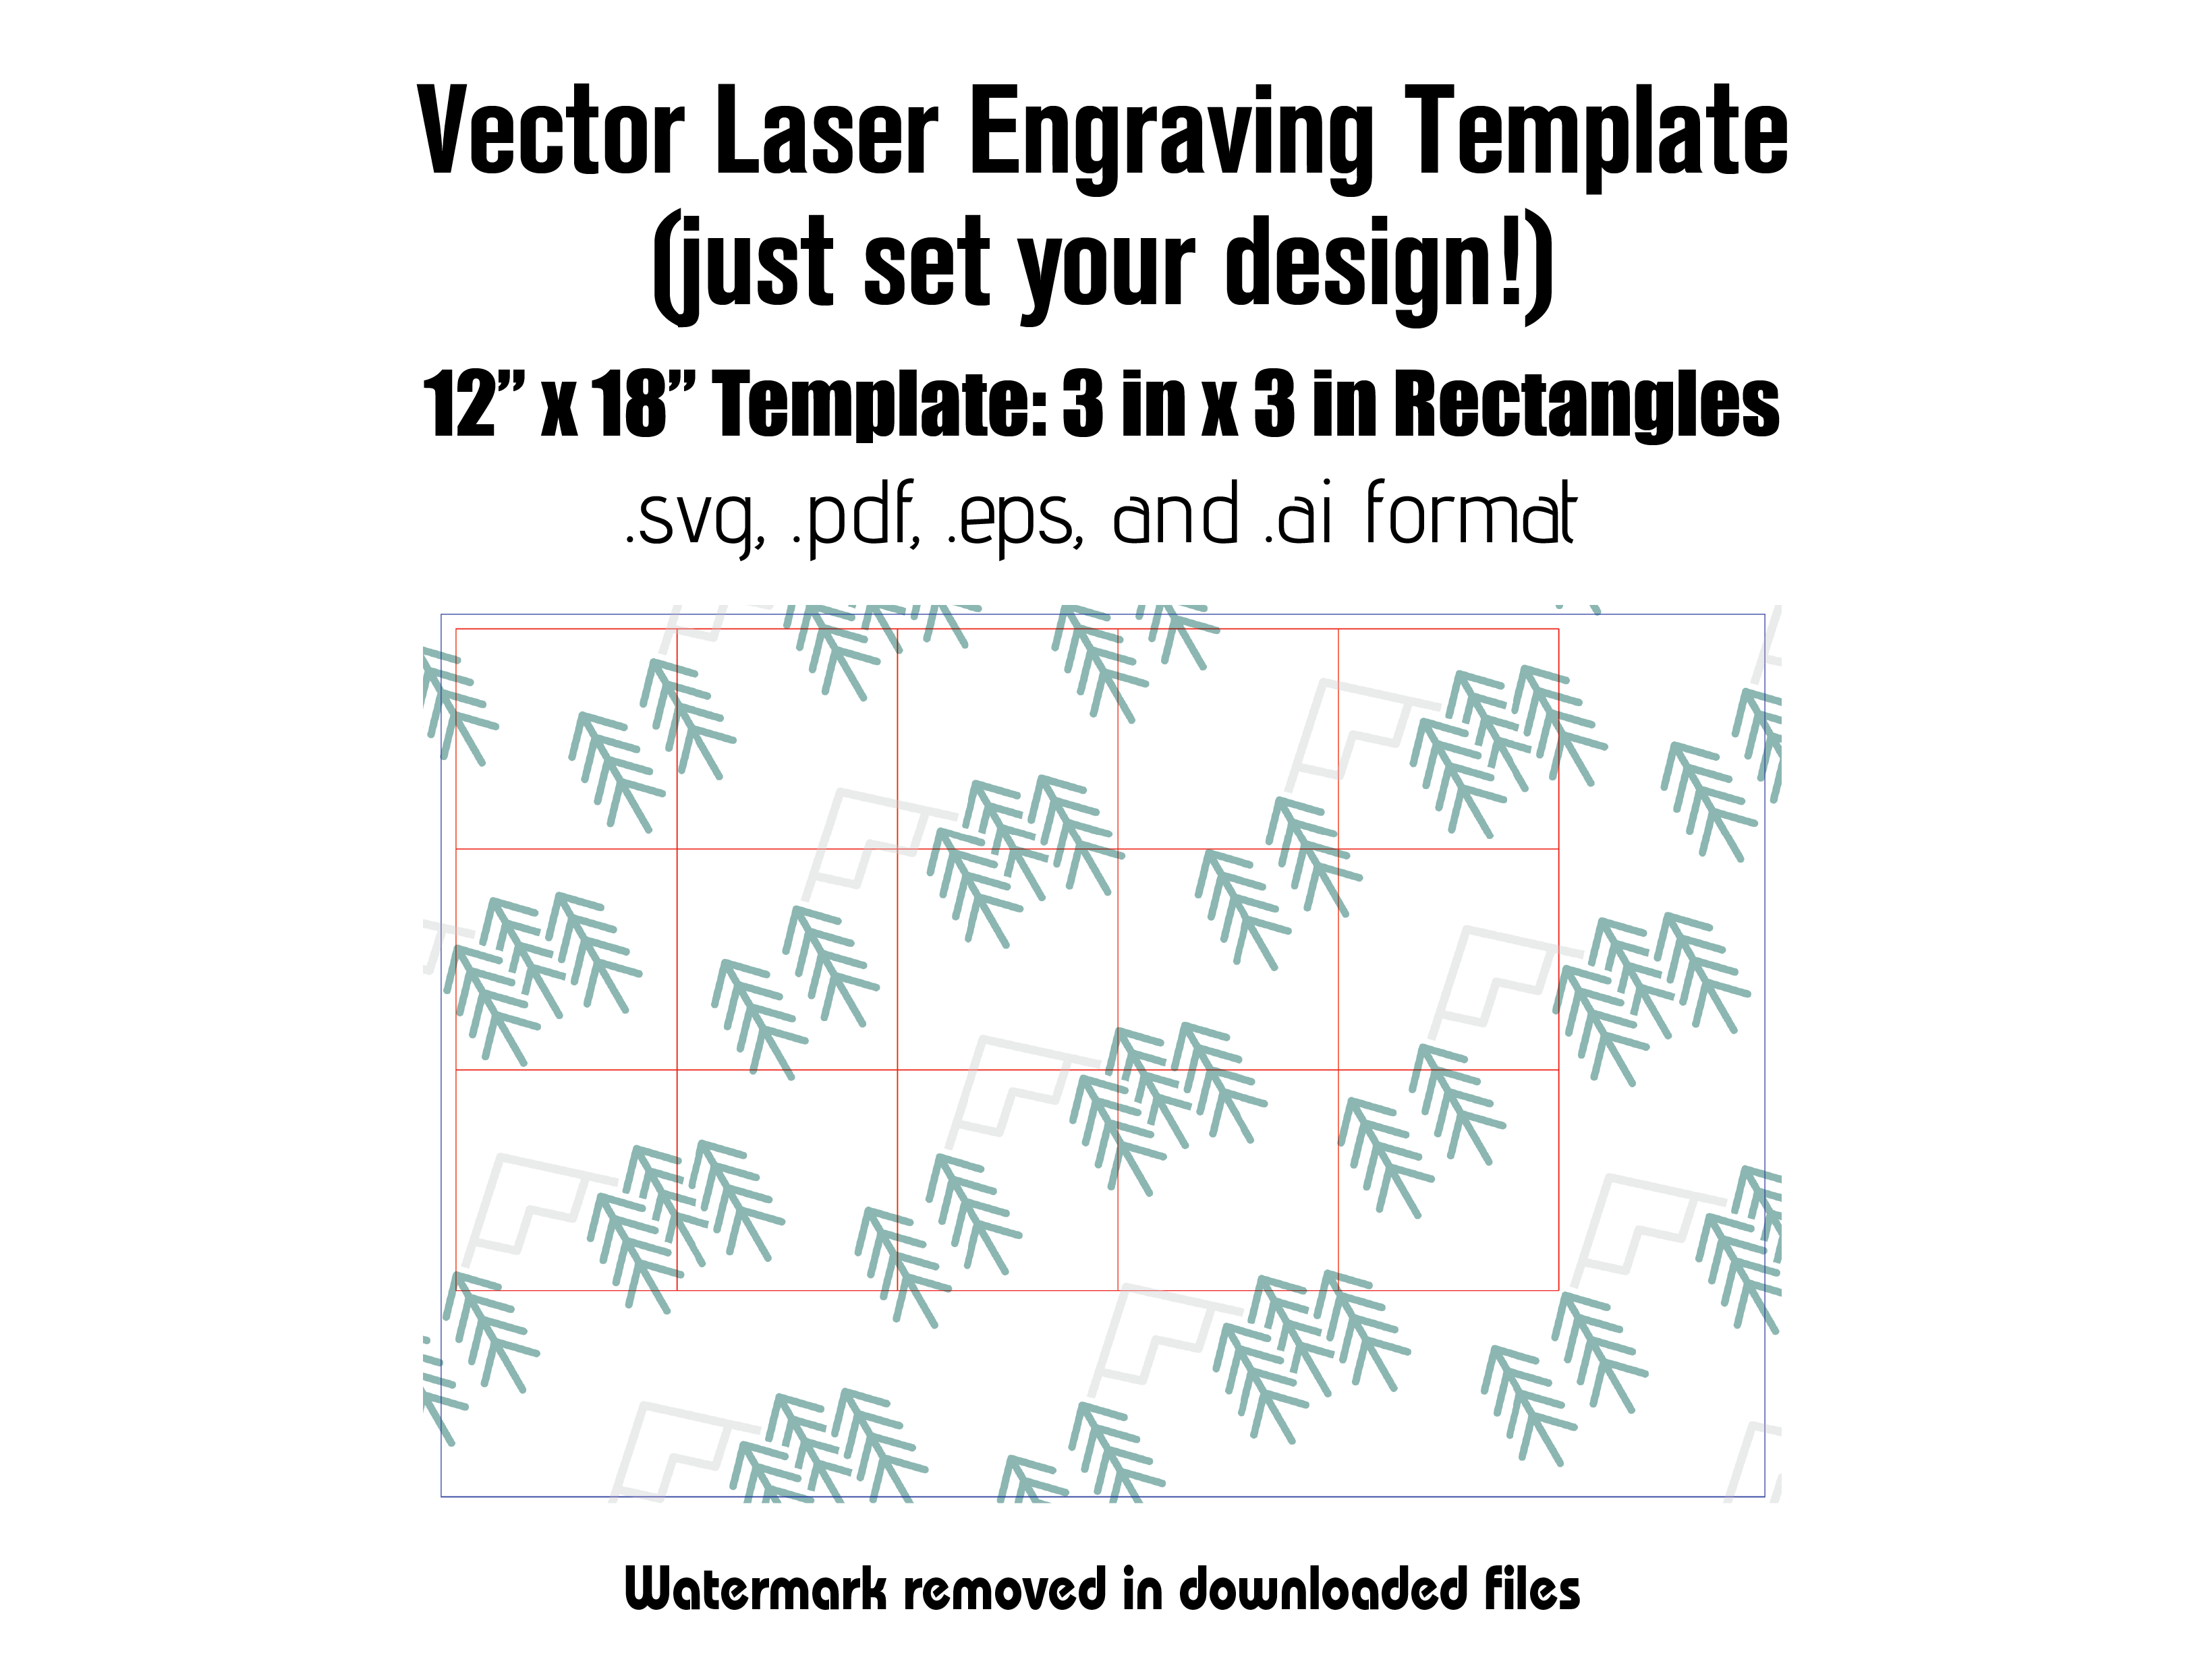 Digital Laser Cutting Template: 3" x 3" Rectangles - 12" x 18" Sheet Size Digital Laser Engraving Files Craftworks NW 